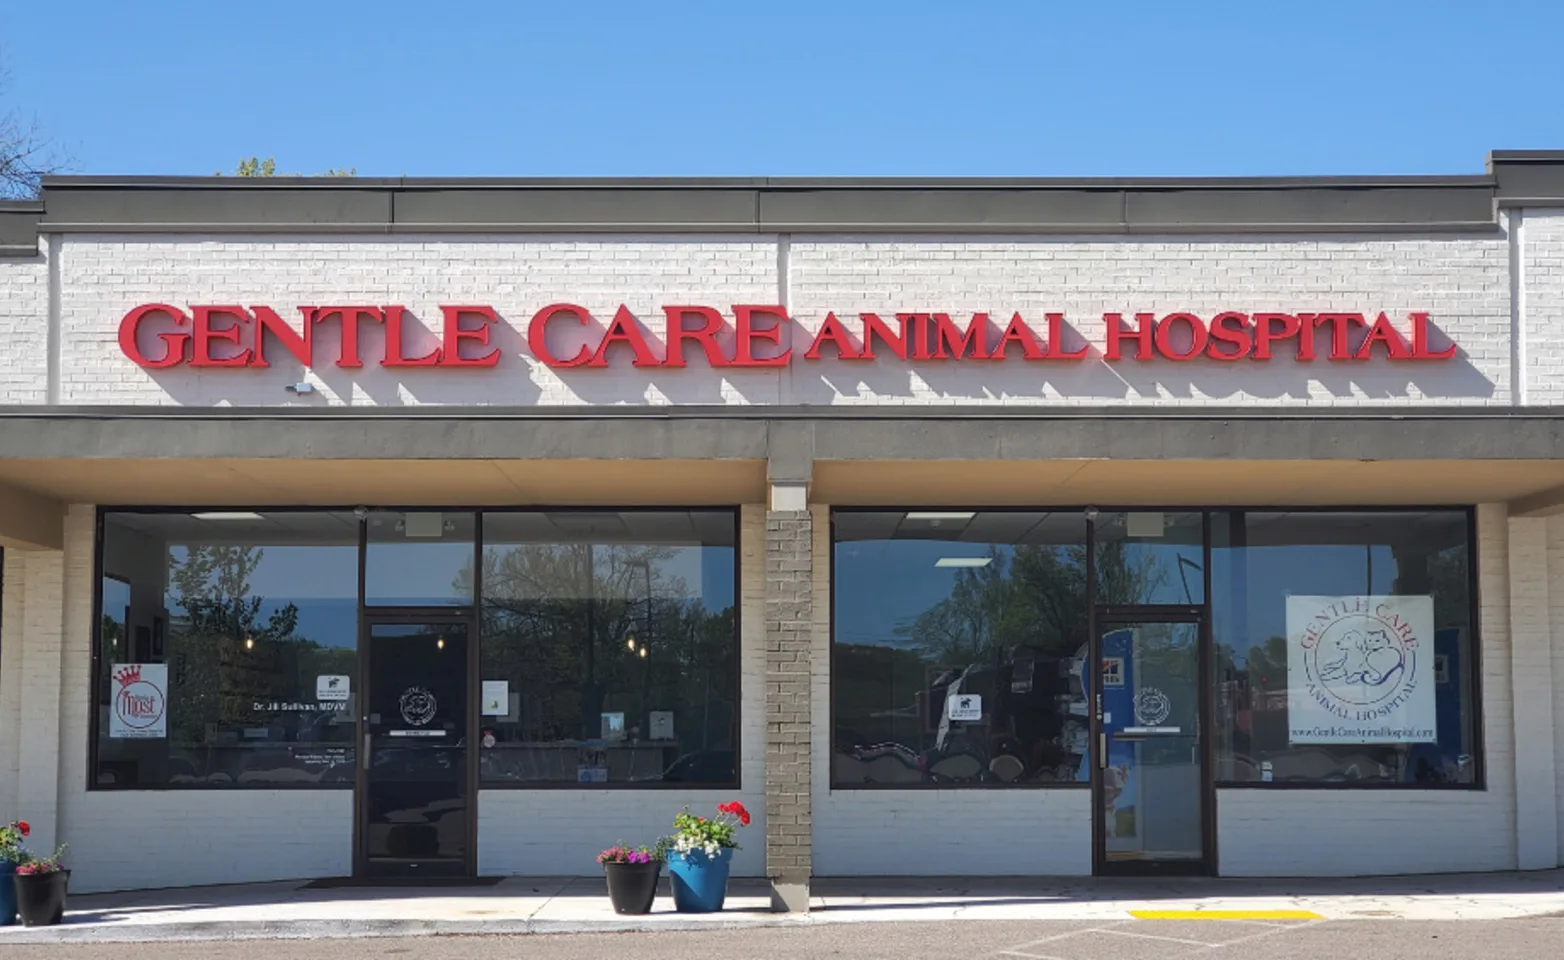 Exterior of Gentle Care Animal Hospital in Bartlett, TN